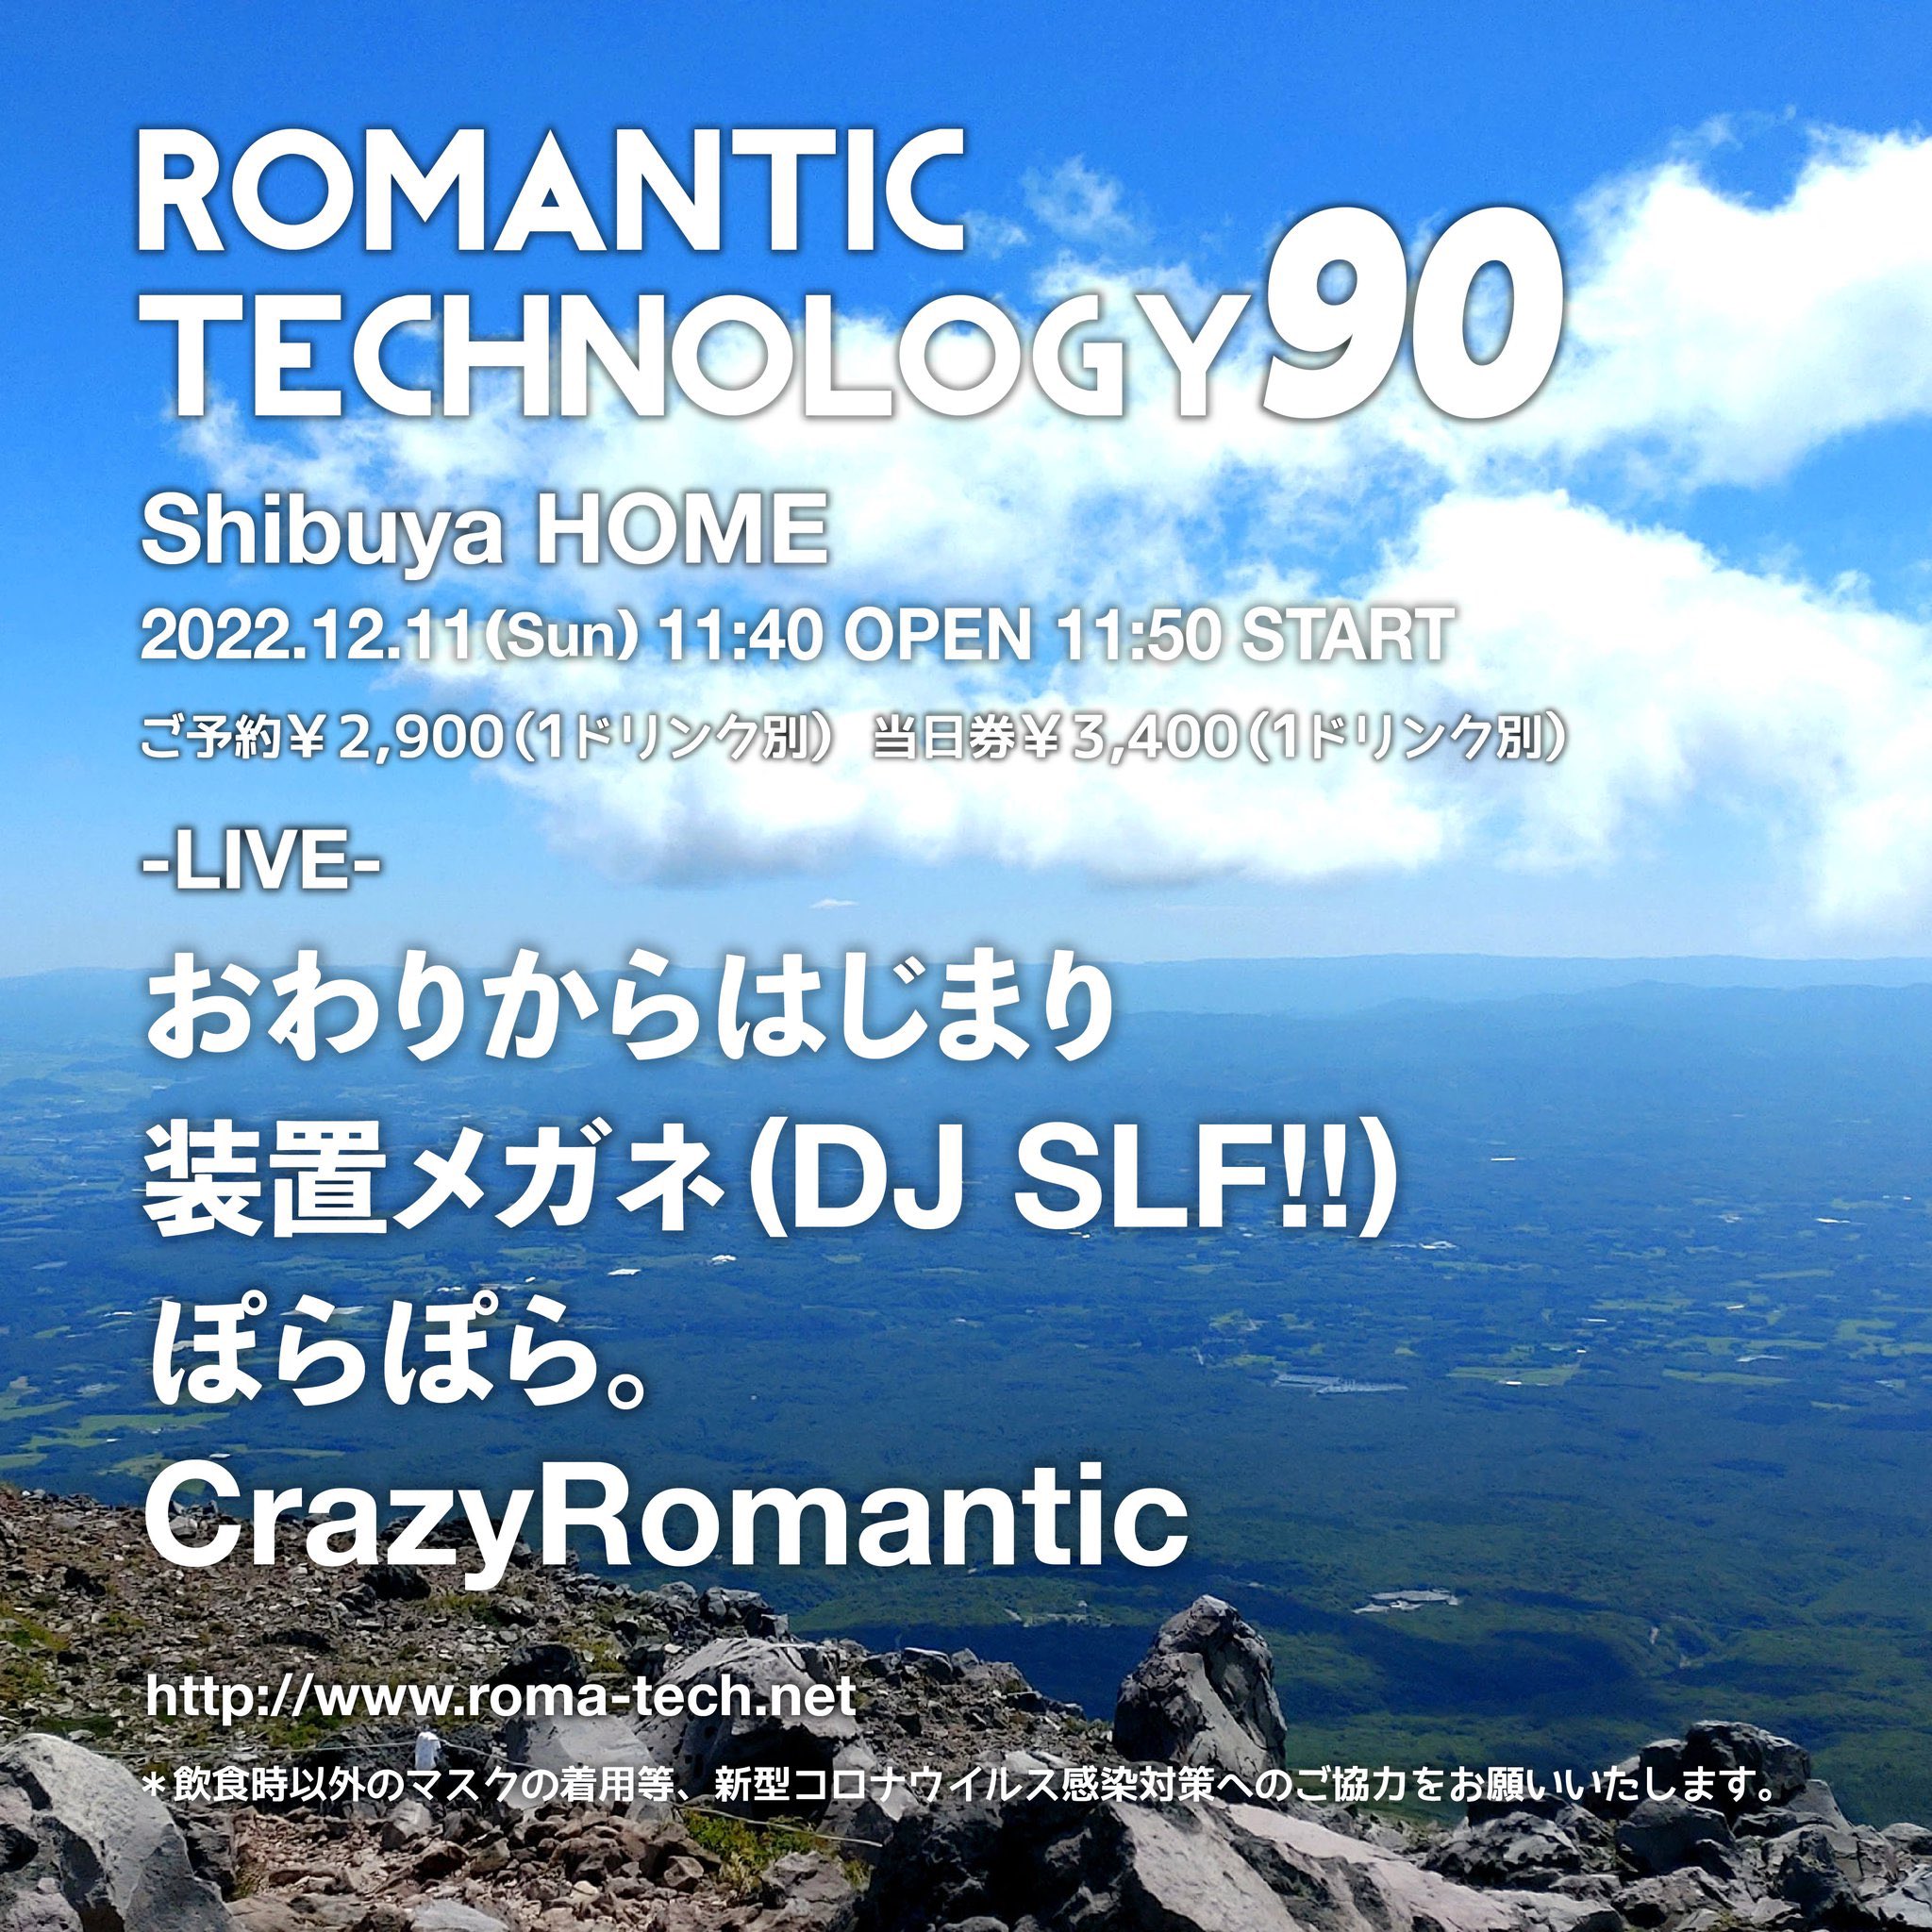 ROMANTIC TECHNOLOGY 90